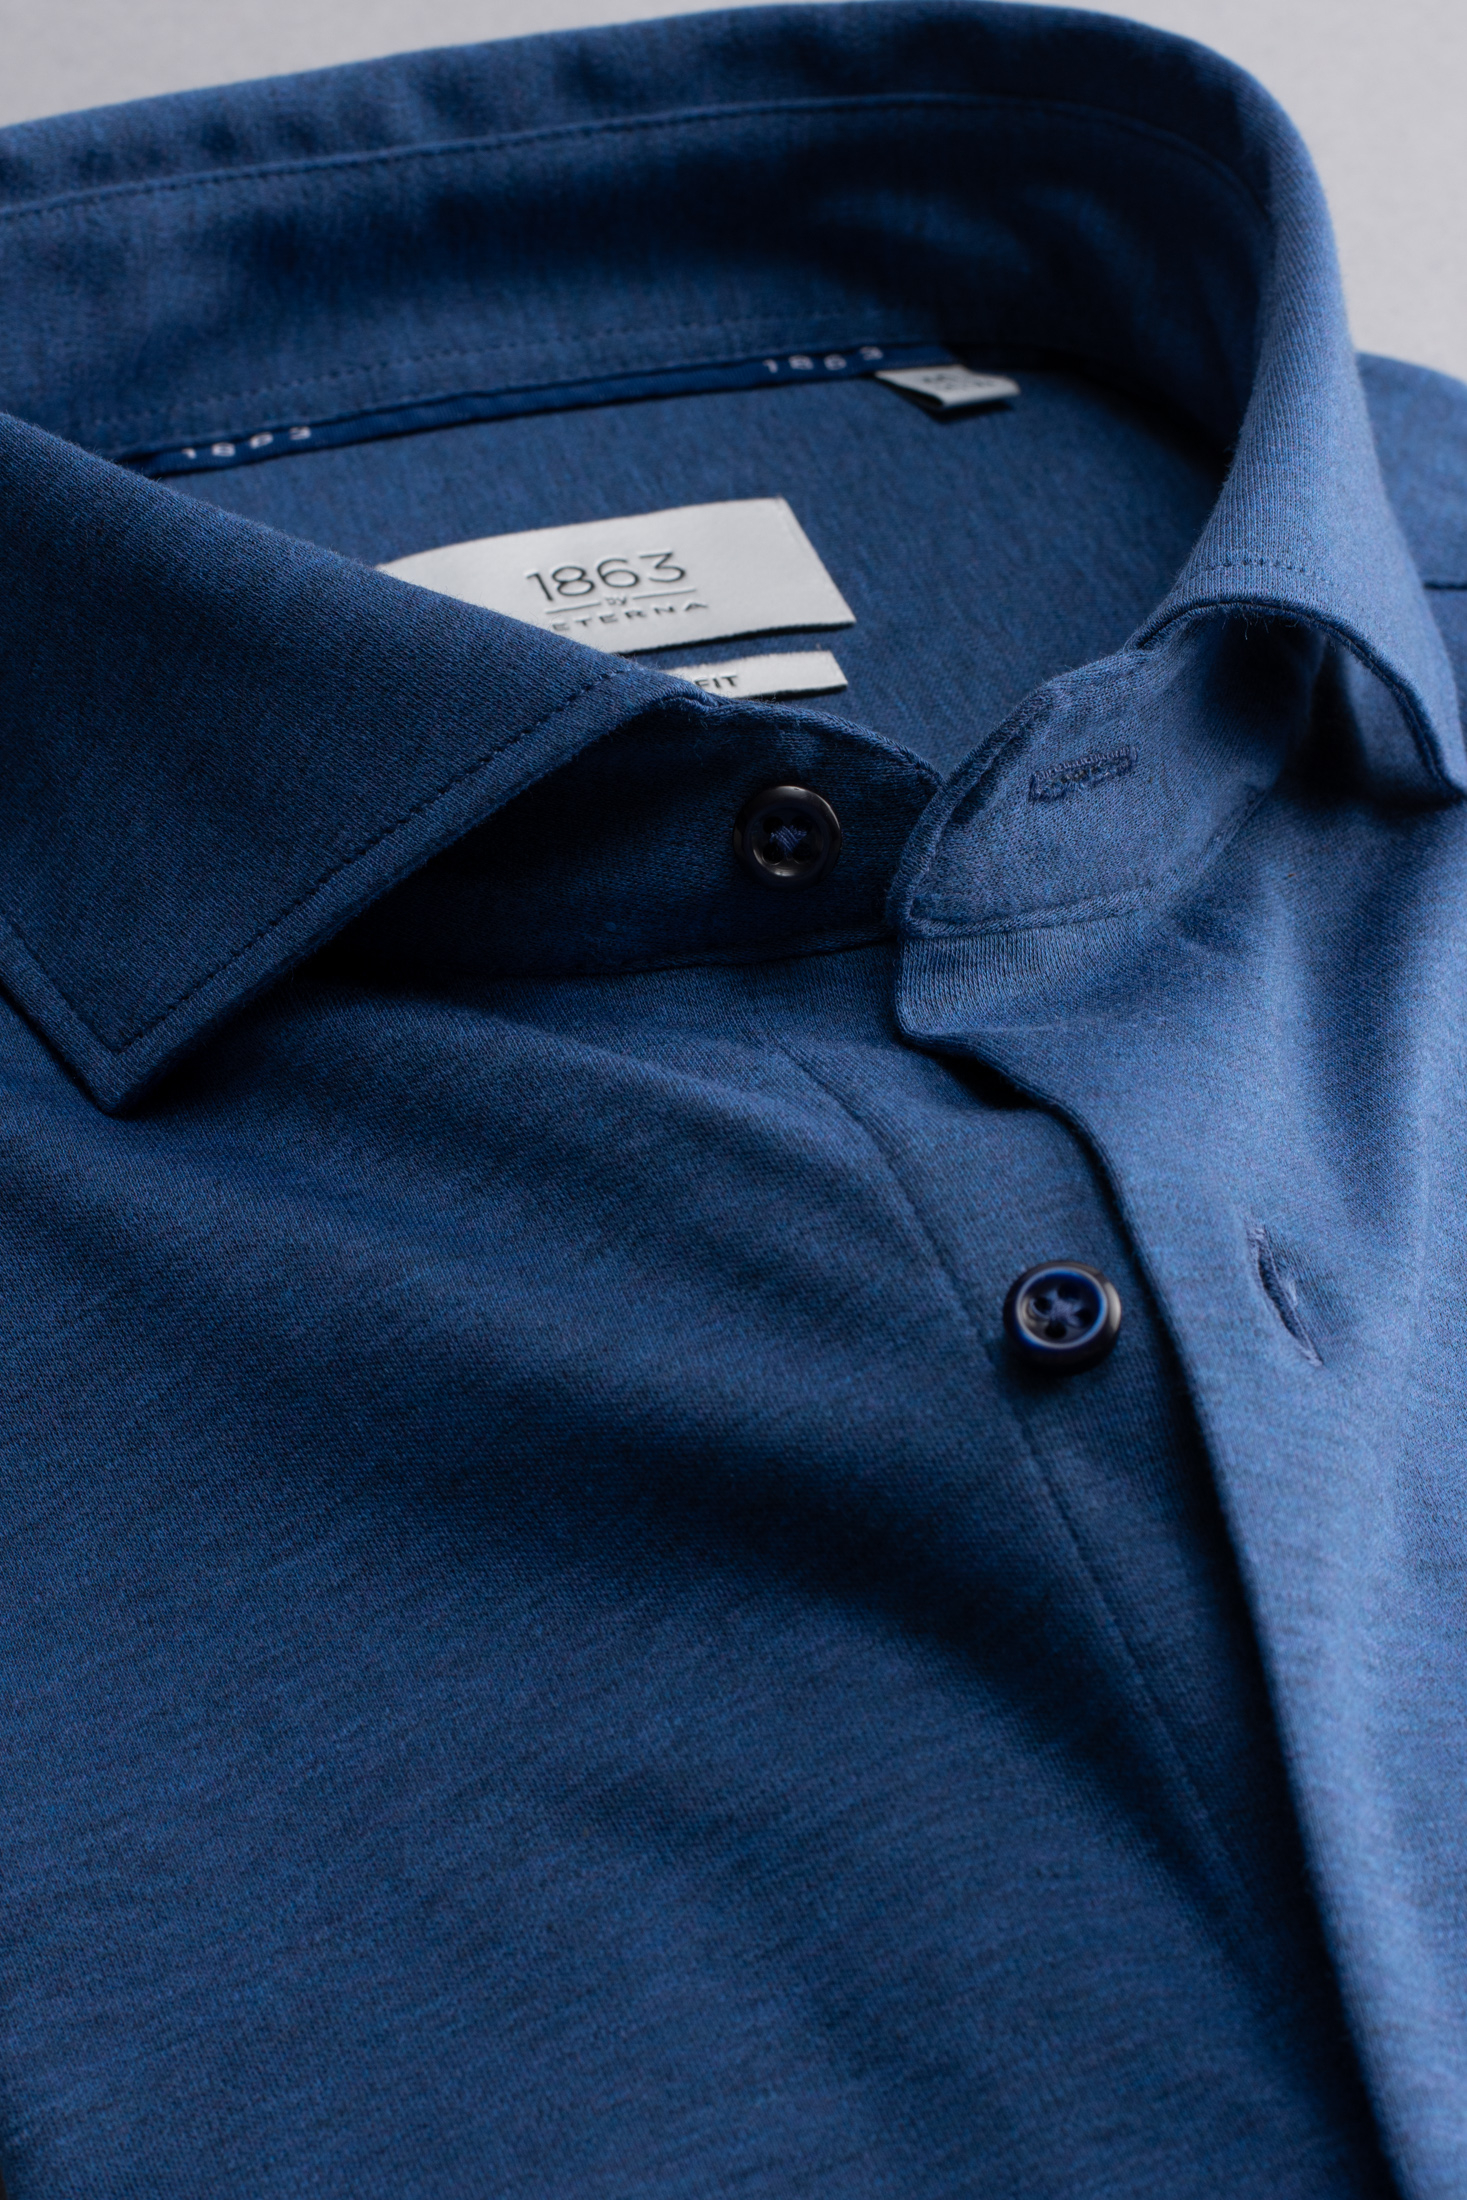 SLIM FIT Jersey Shirt in blau unifarben | blau | 43 | Langarm |  1SH00378-01-41-43-1/1